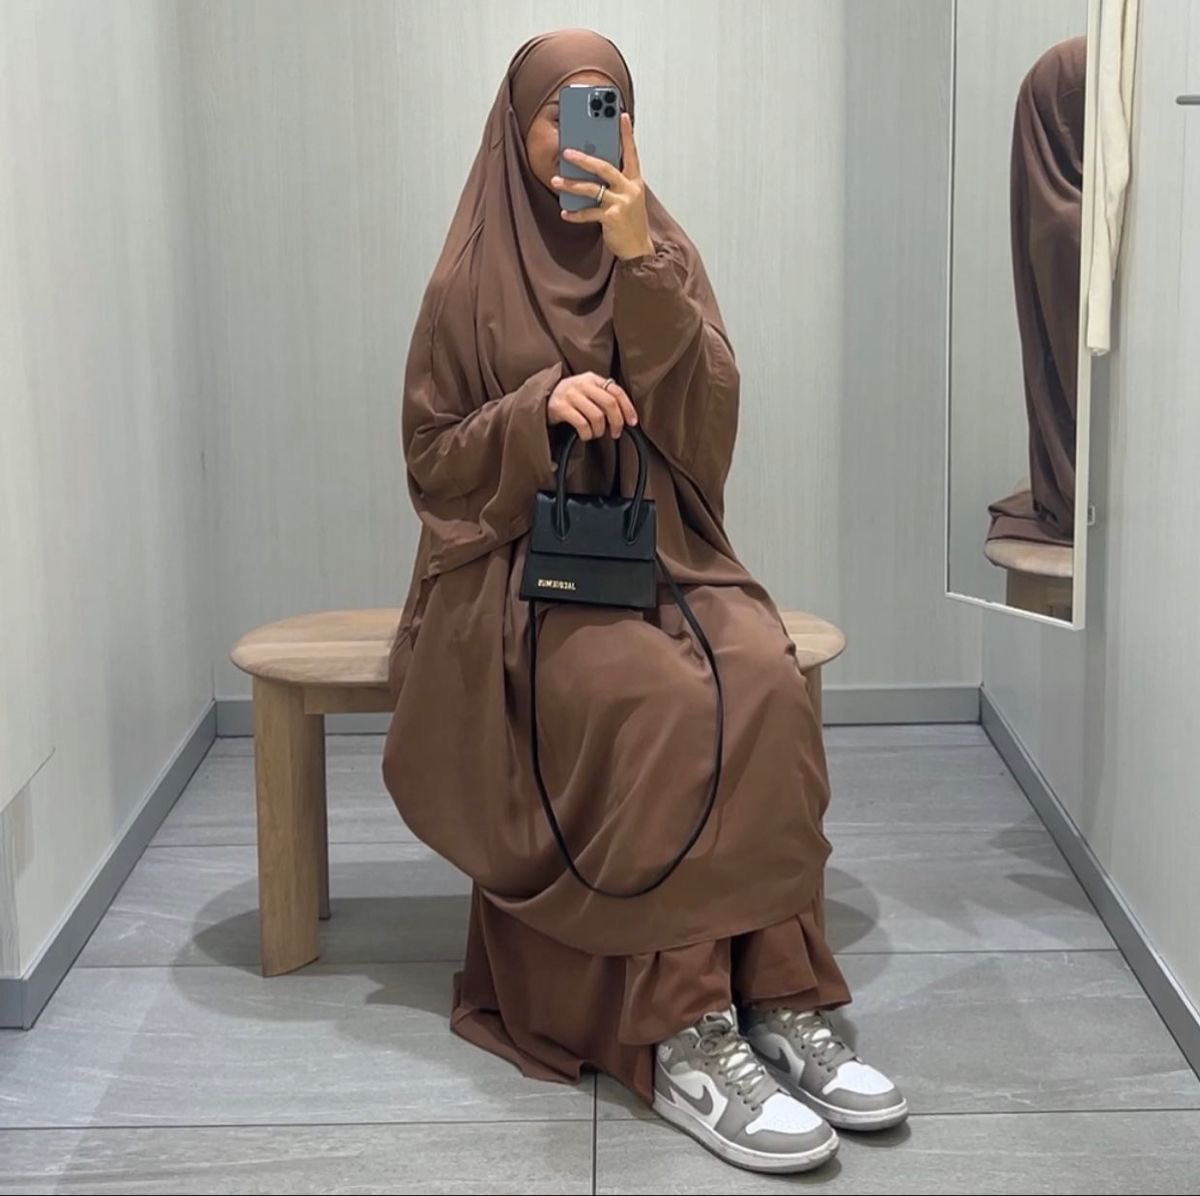 Muslim ladies that wear sneakers on Hijab are so beautiful ❤️